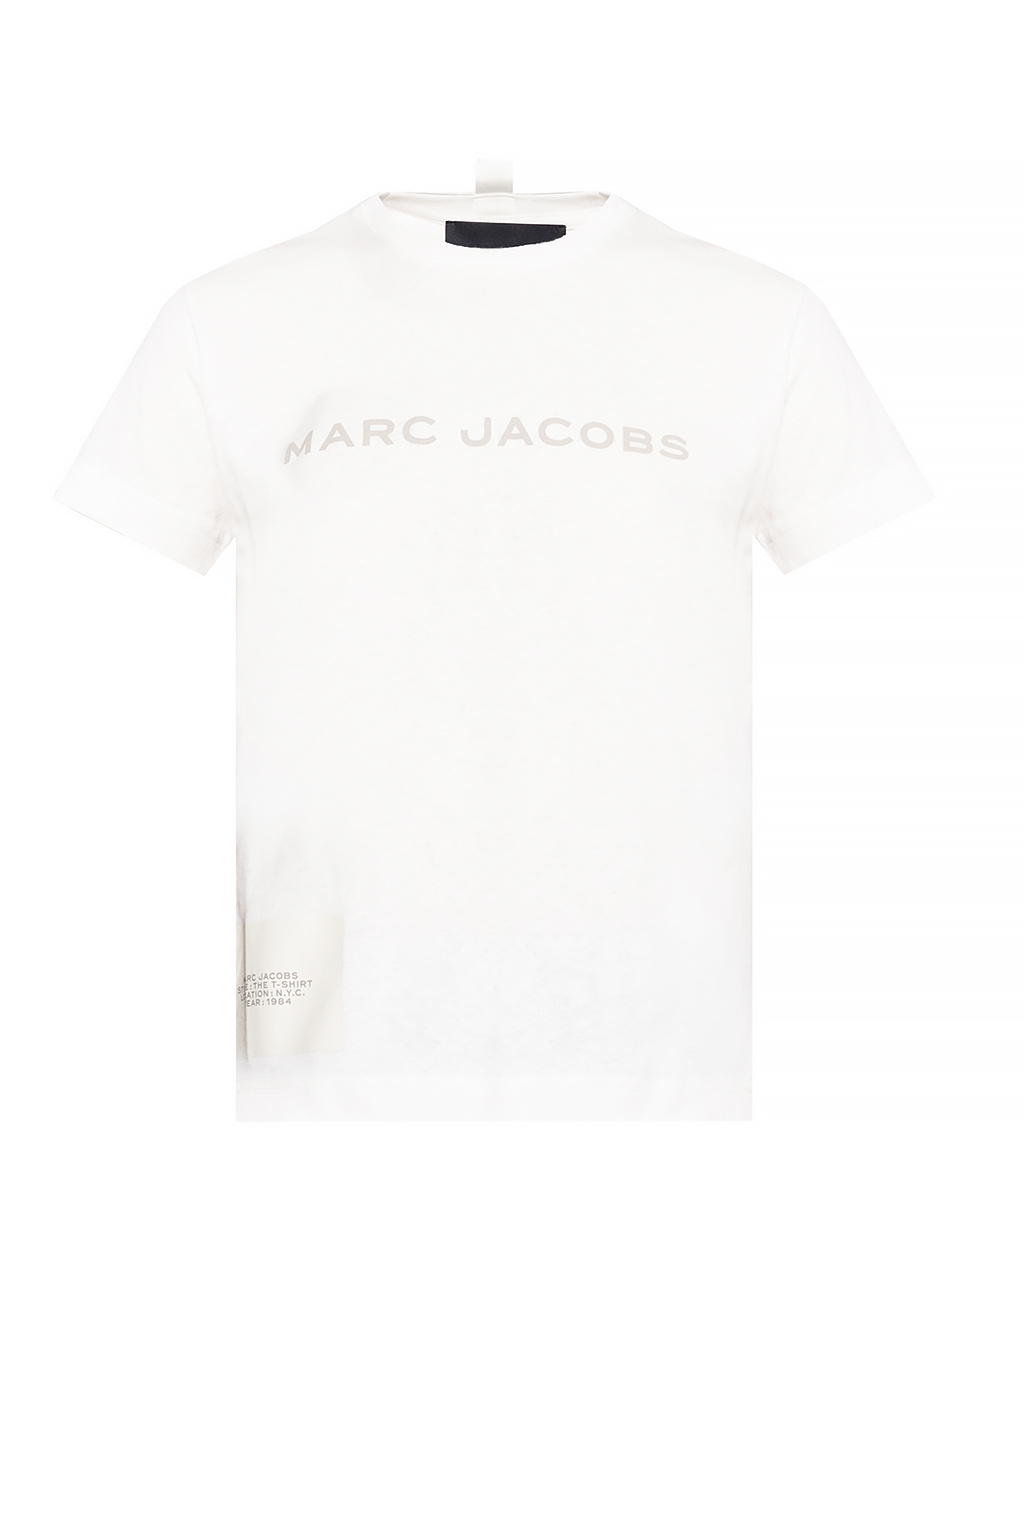 Marc Jacobs Marc Jacobs SAHARA SOFT CALF